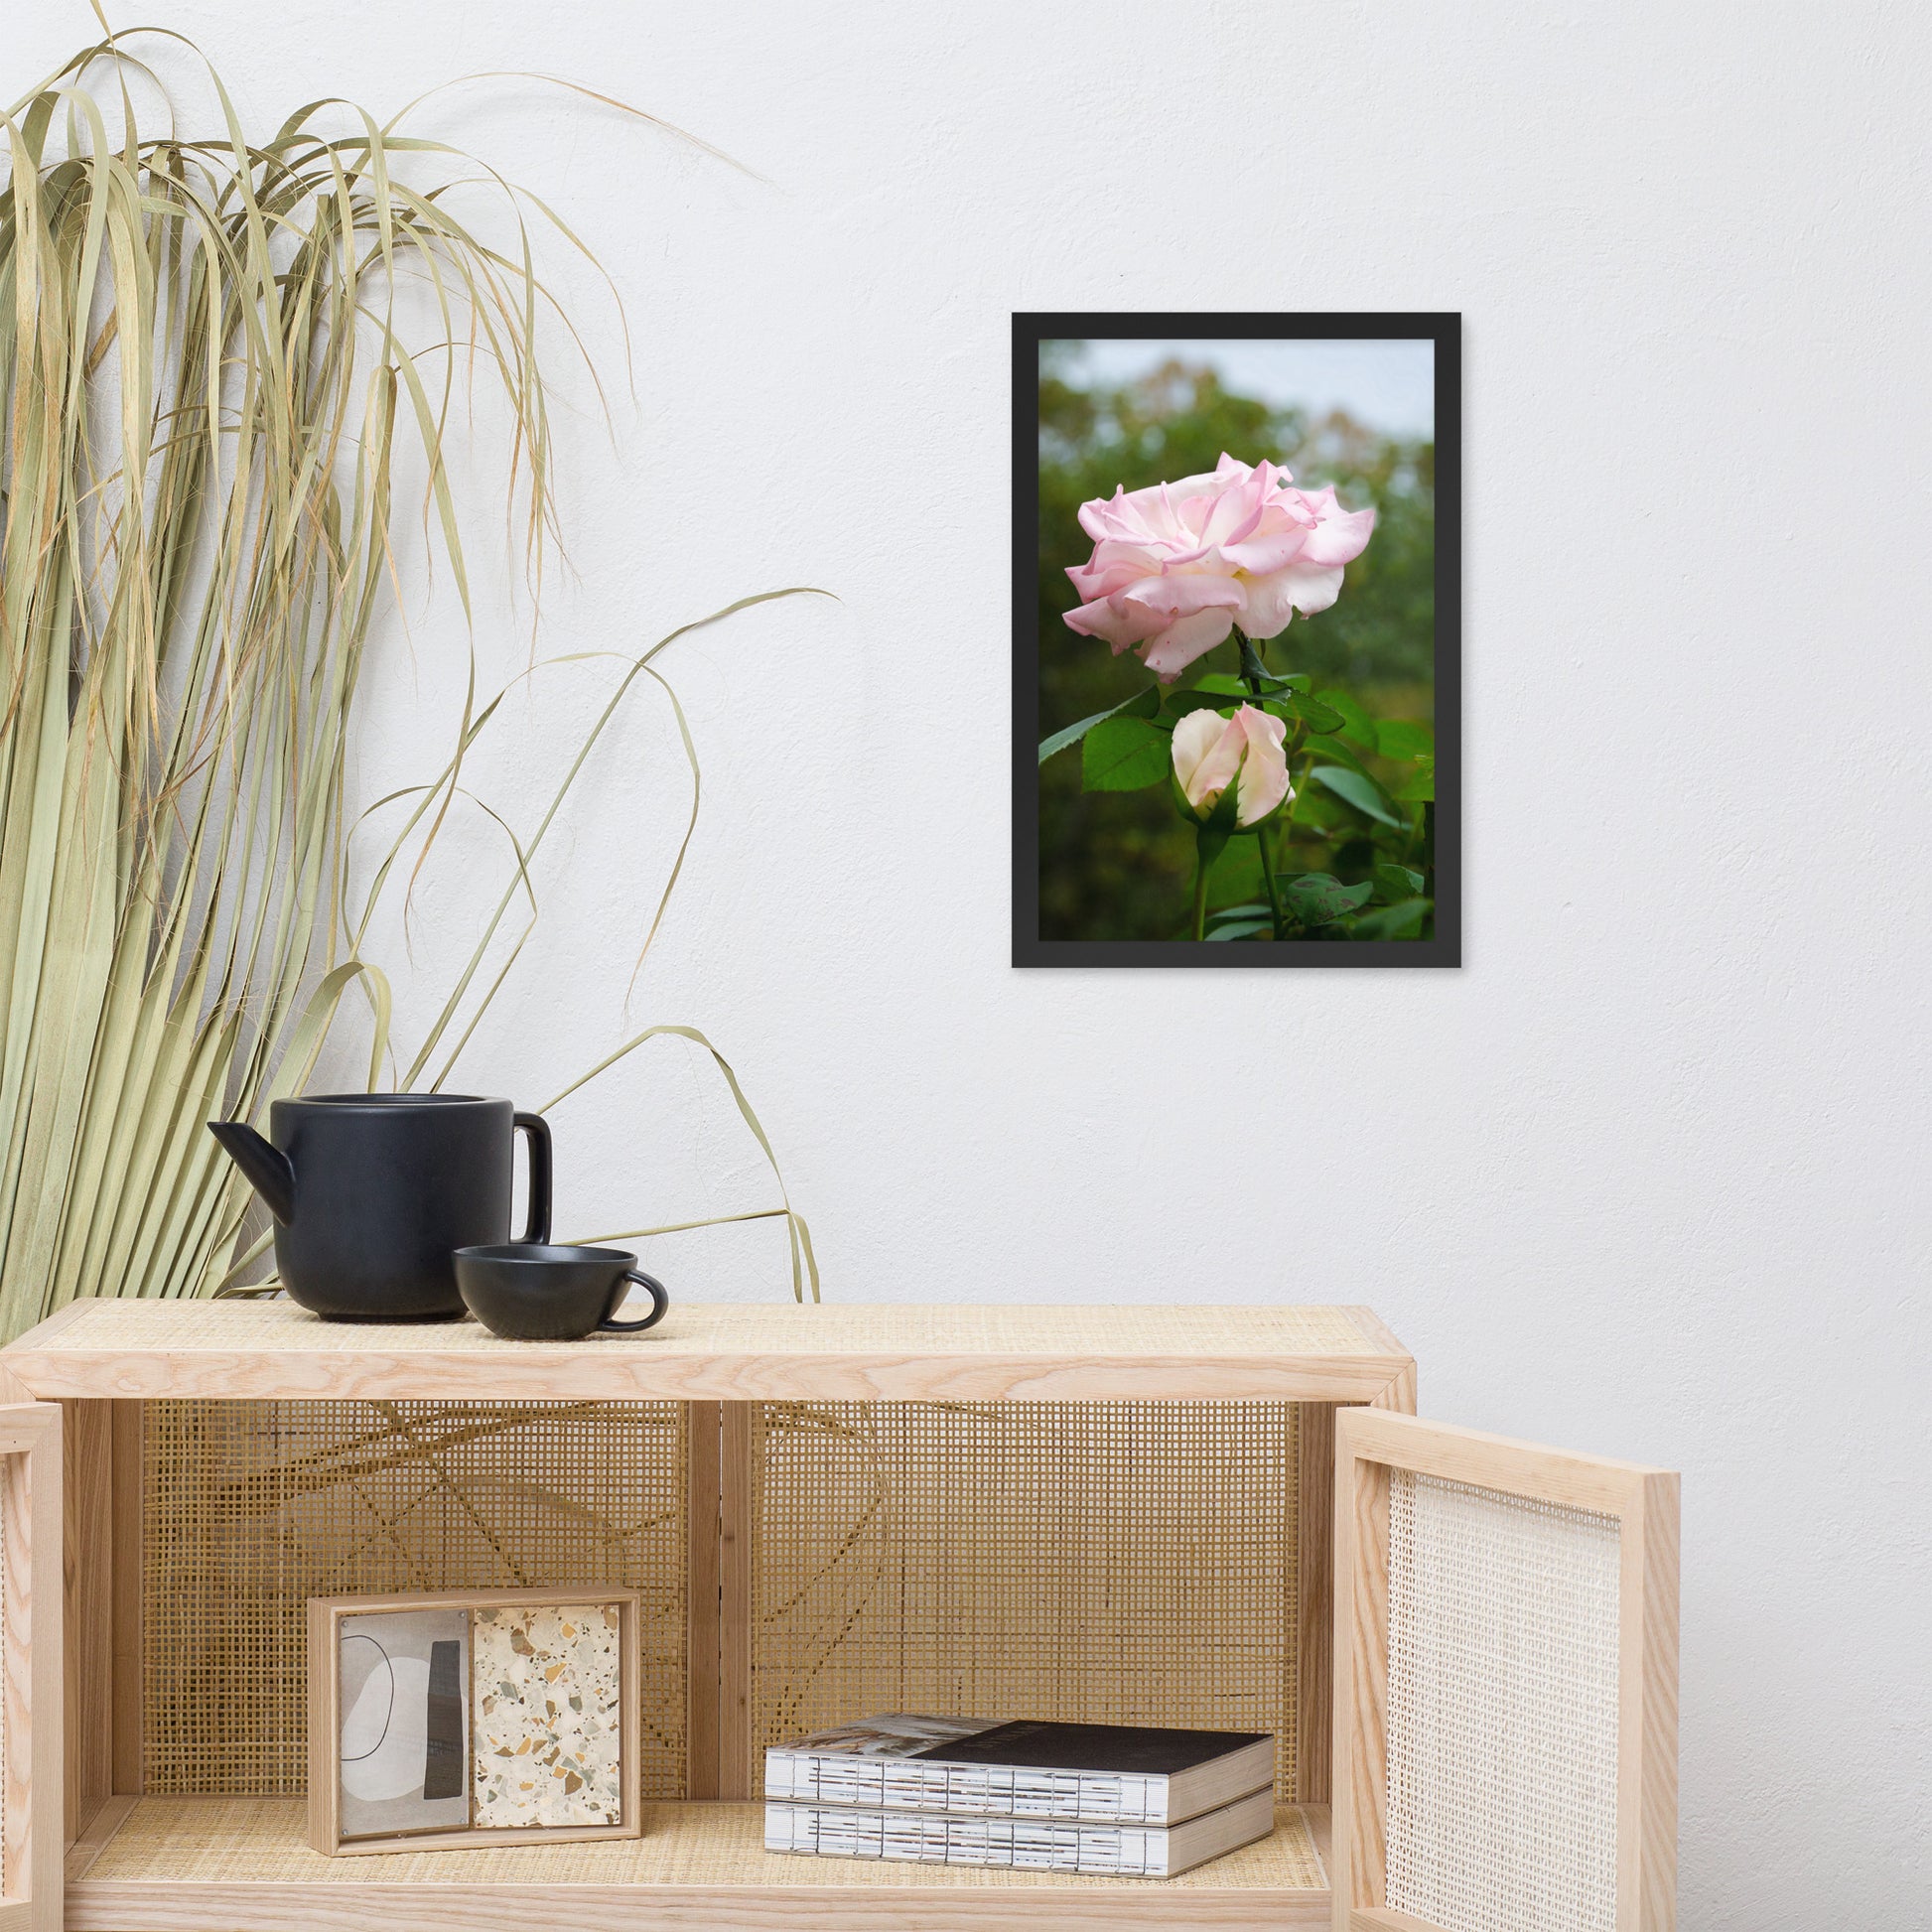 Floral Wall Prints Framed: Admiration - Pink Rose Floral / Botanical / Nature Photo Framed Wall Art Print - Artwork - Wall Decor - Home Decor